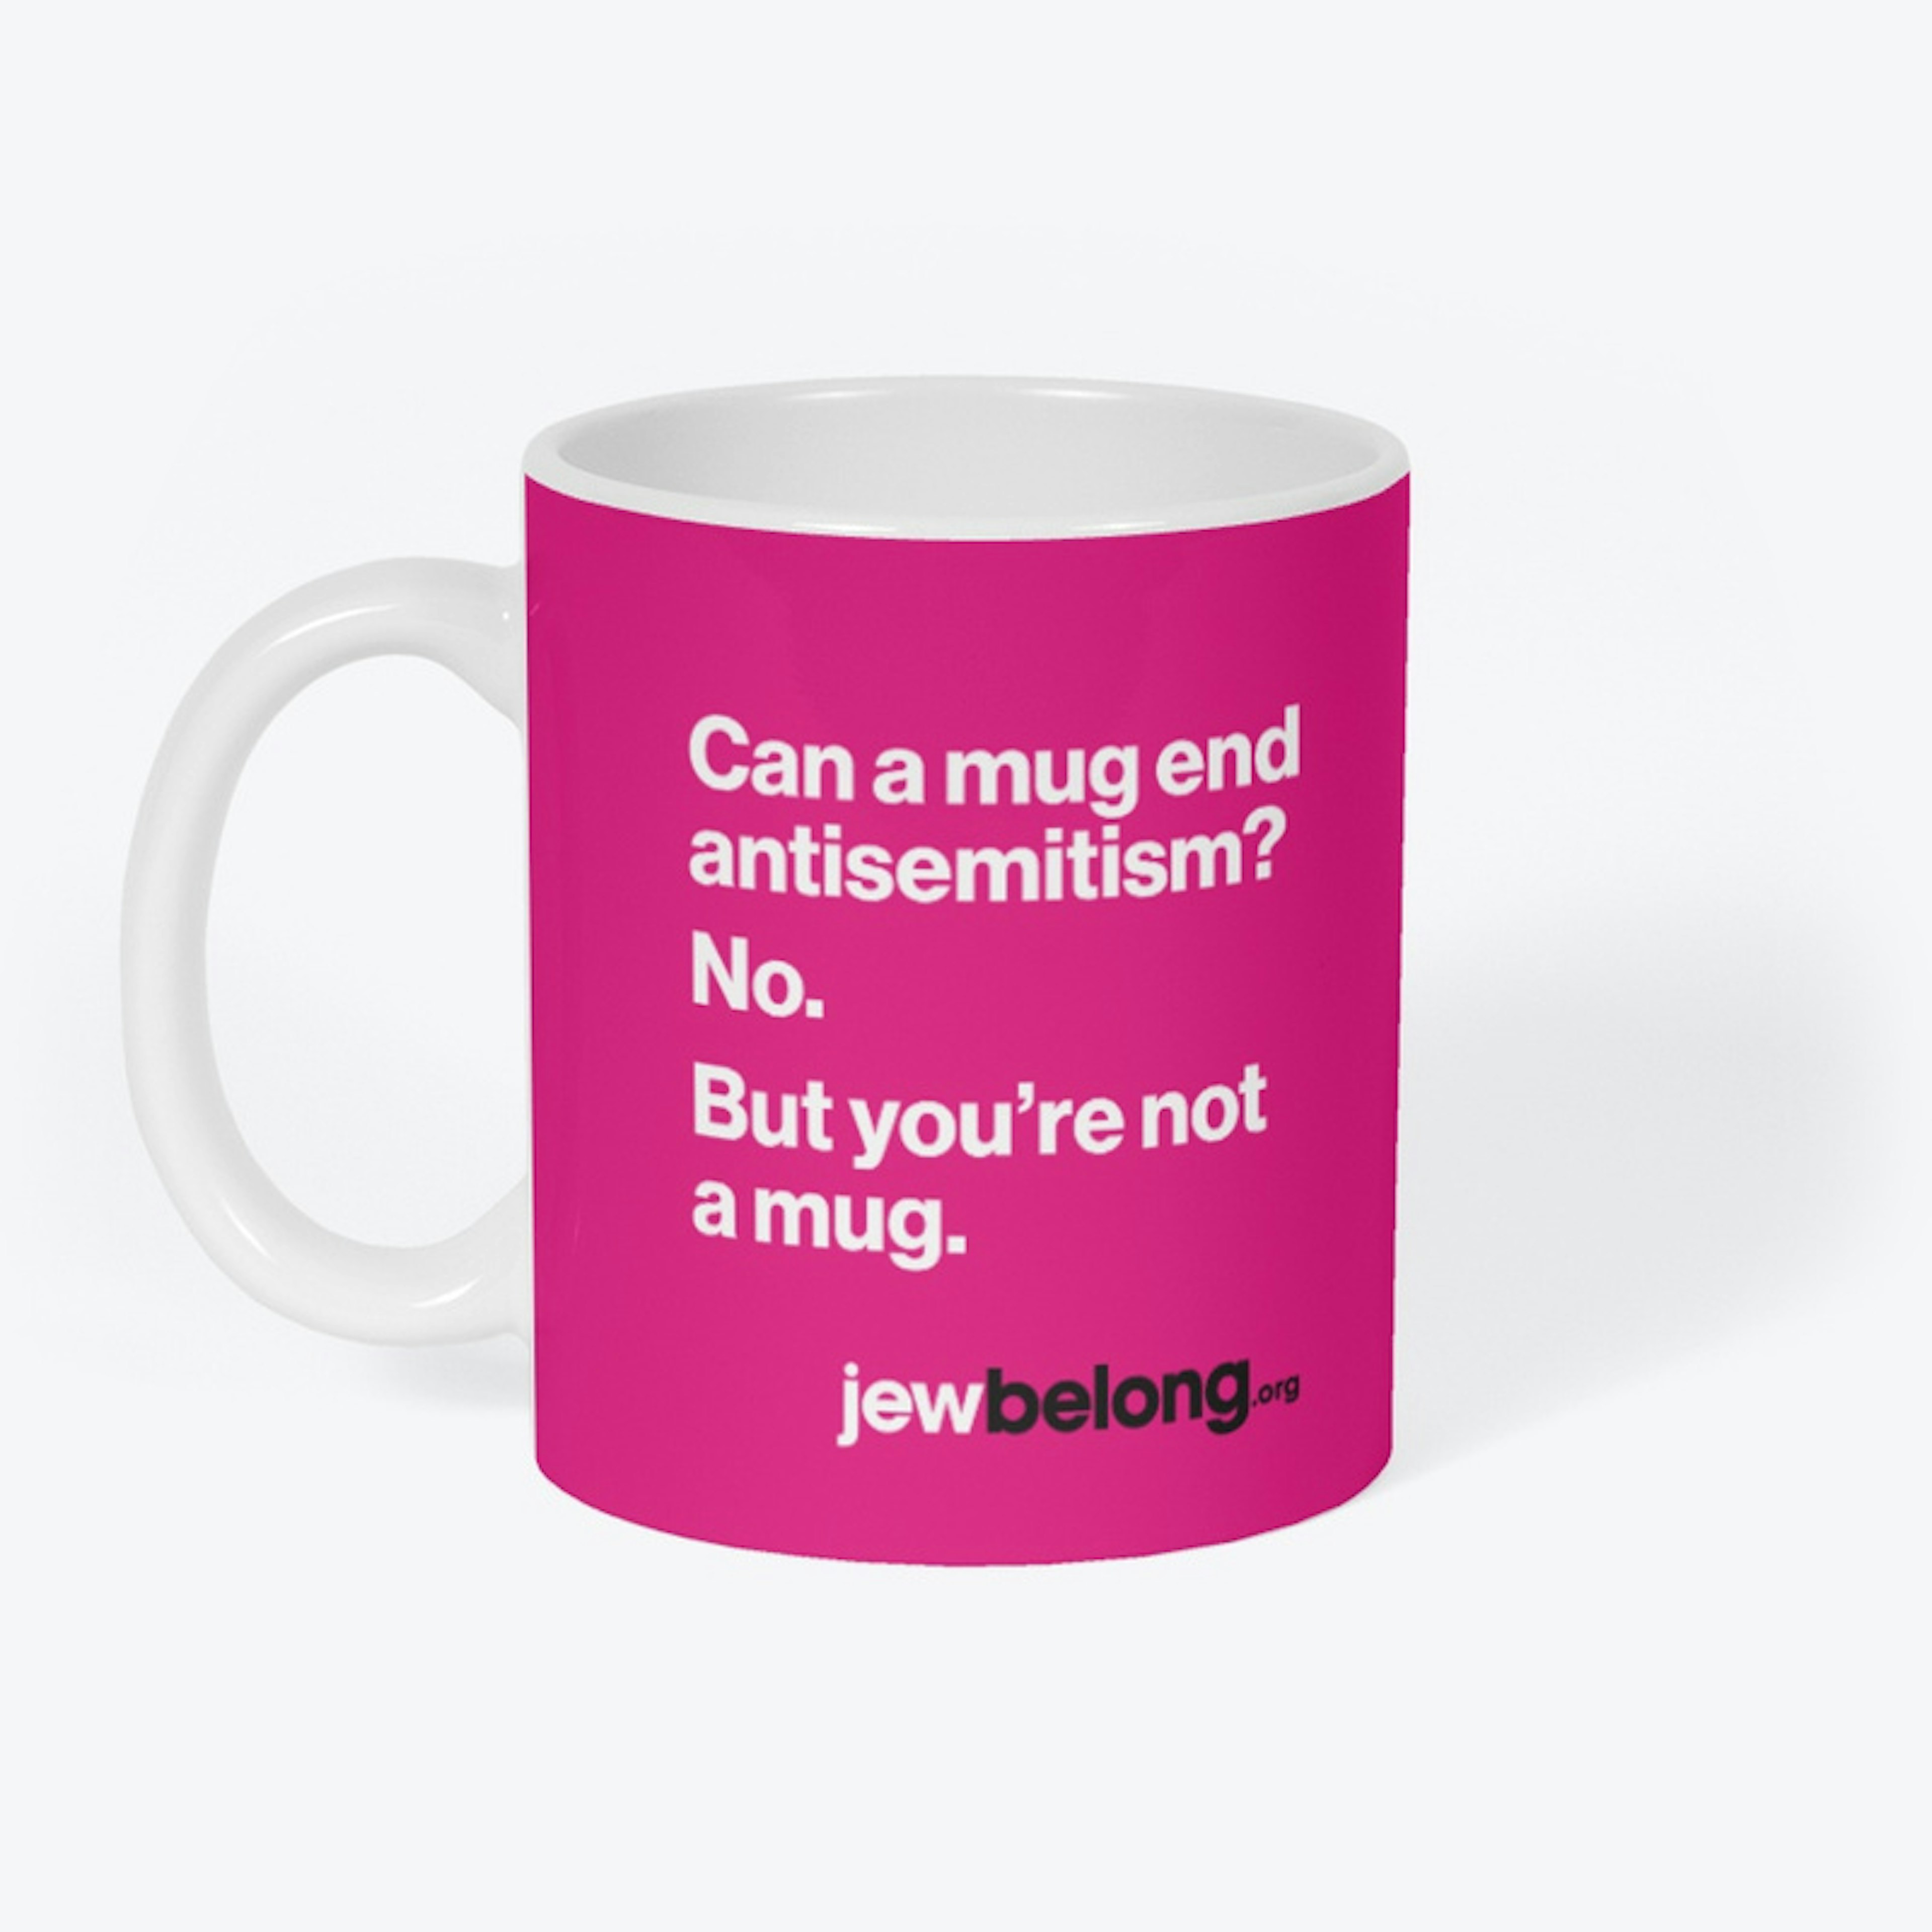 Ceramic mug with slogan